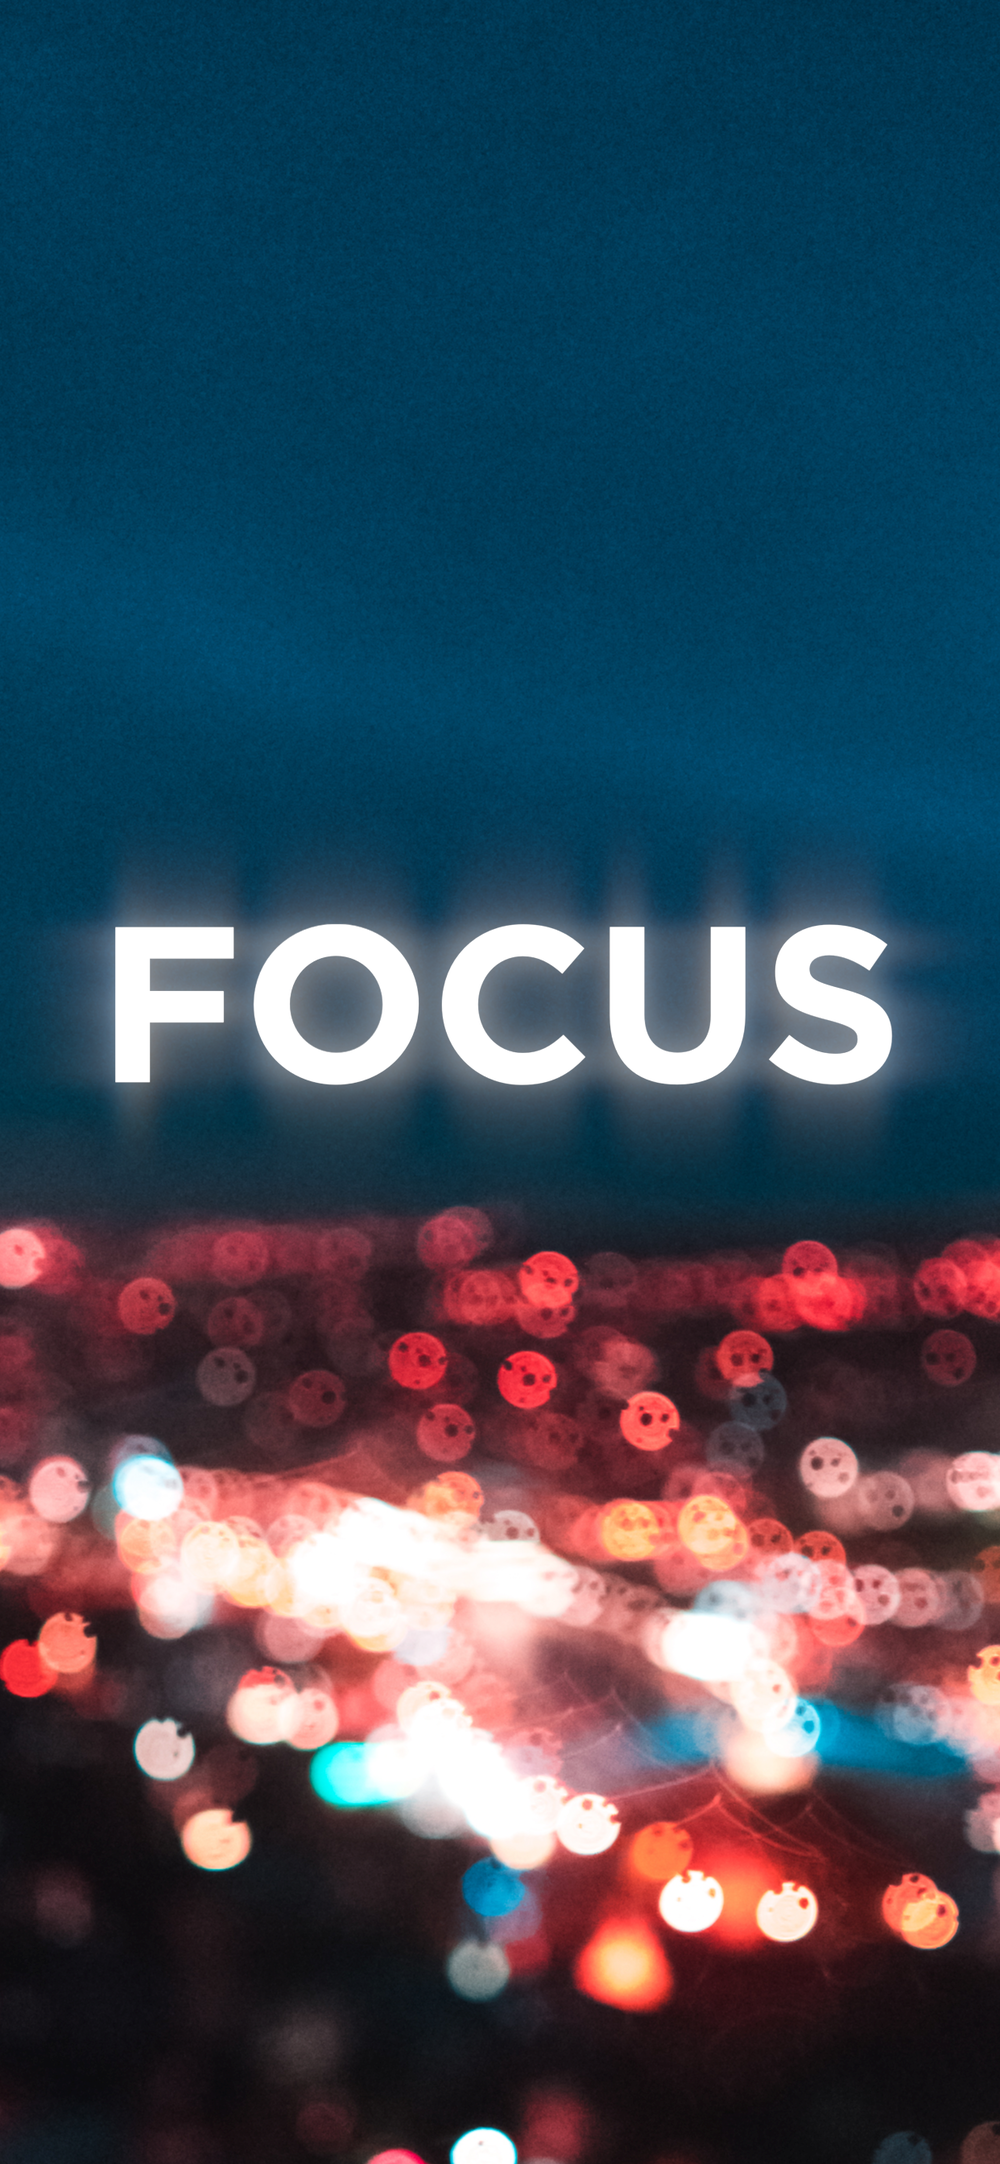 Motivational Wallpaper - Focus - Goal Setting Guide